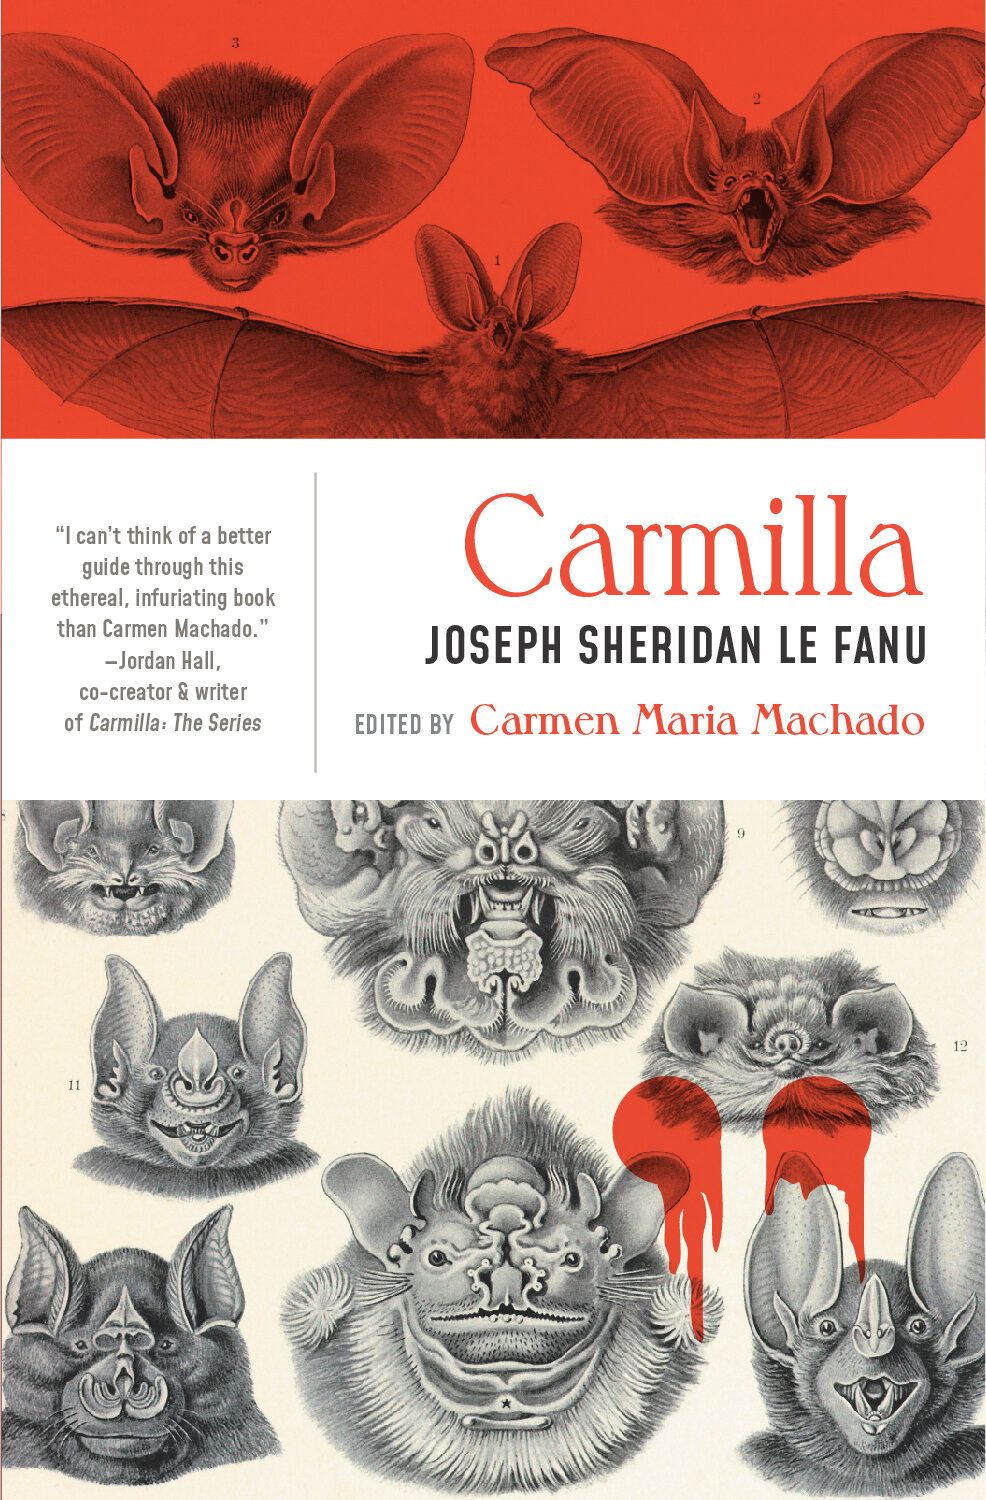 Carmilla by Carmen Maria Machado book cover